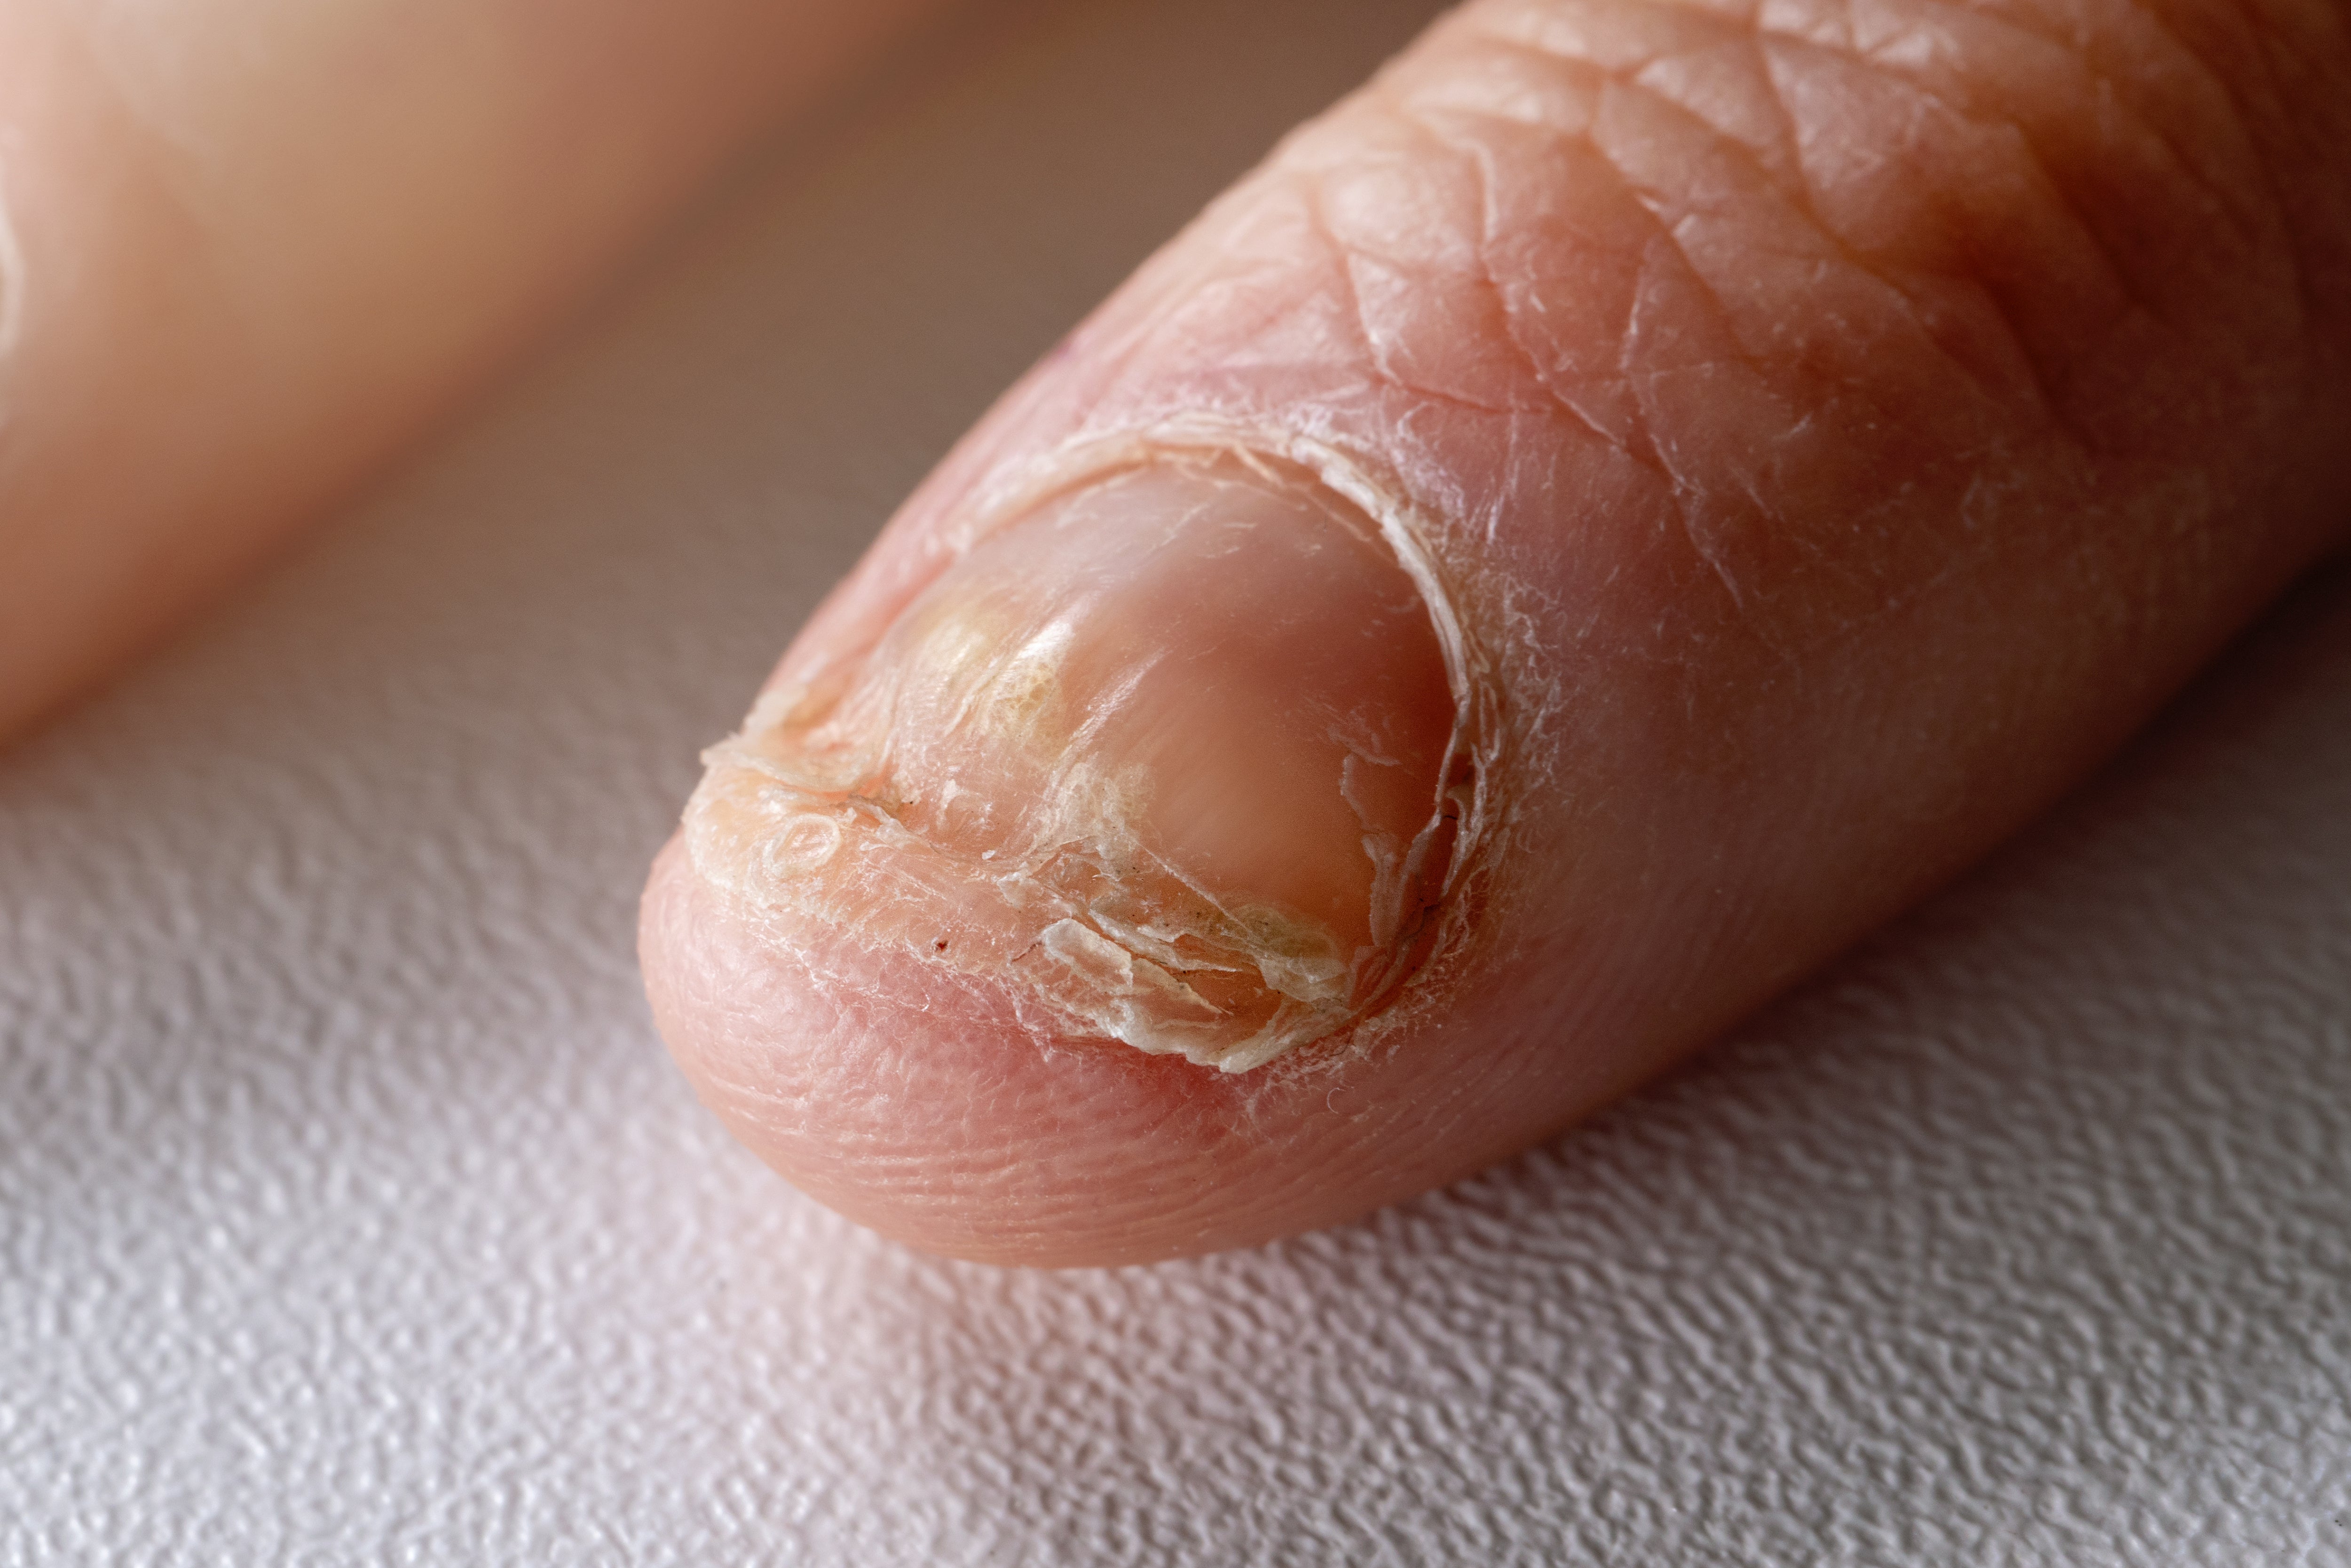 Why is my nail green? Pseudomonas & How to treat it? - YouTube